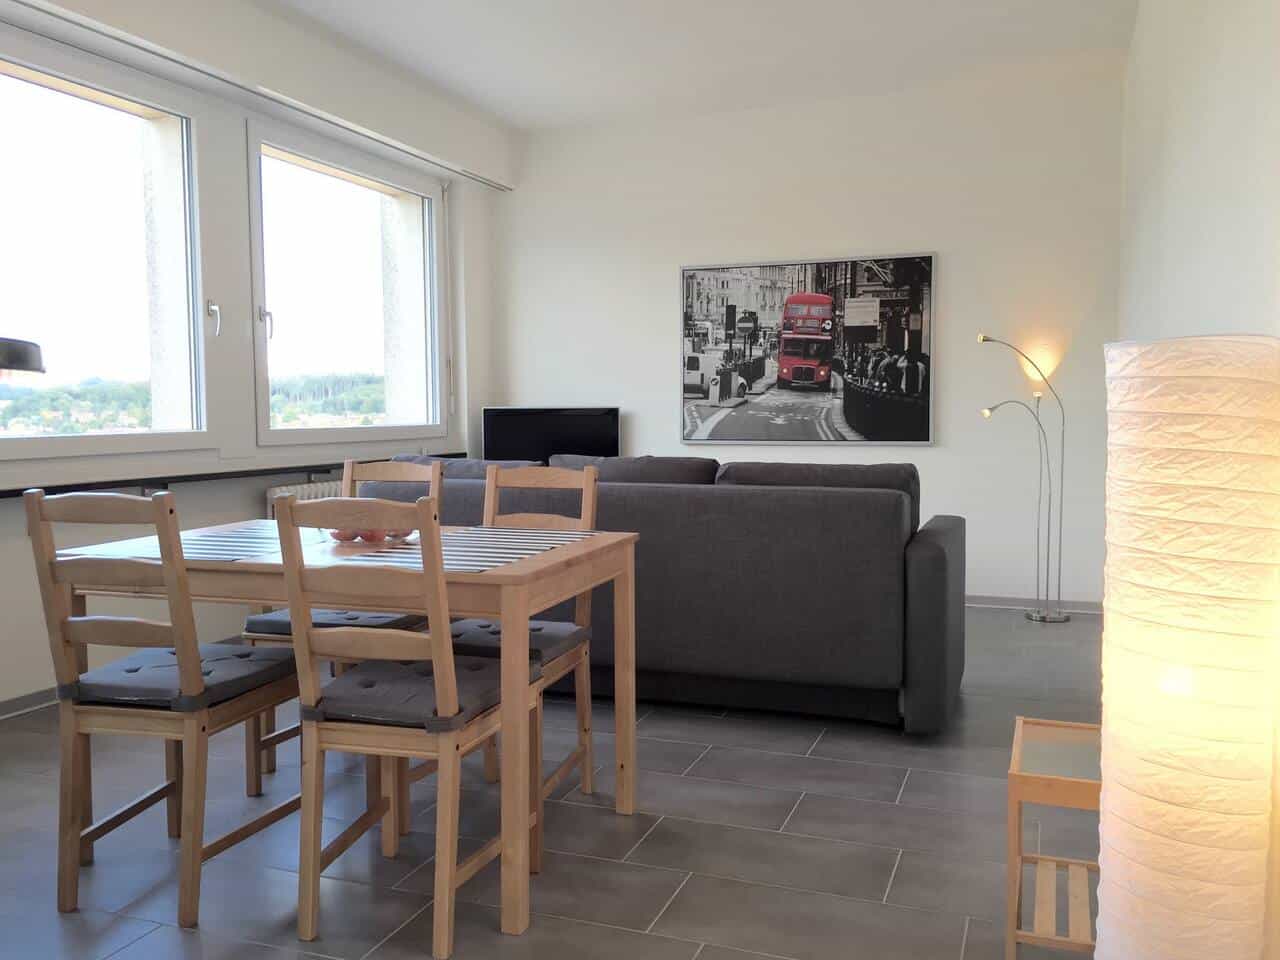 Image of Airbnb rental in Bern, Switzerland